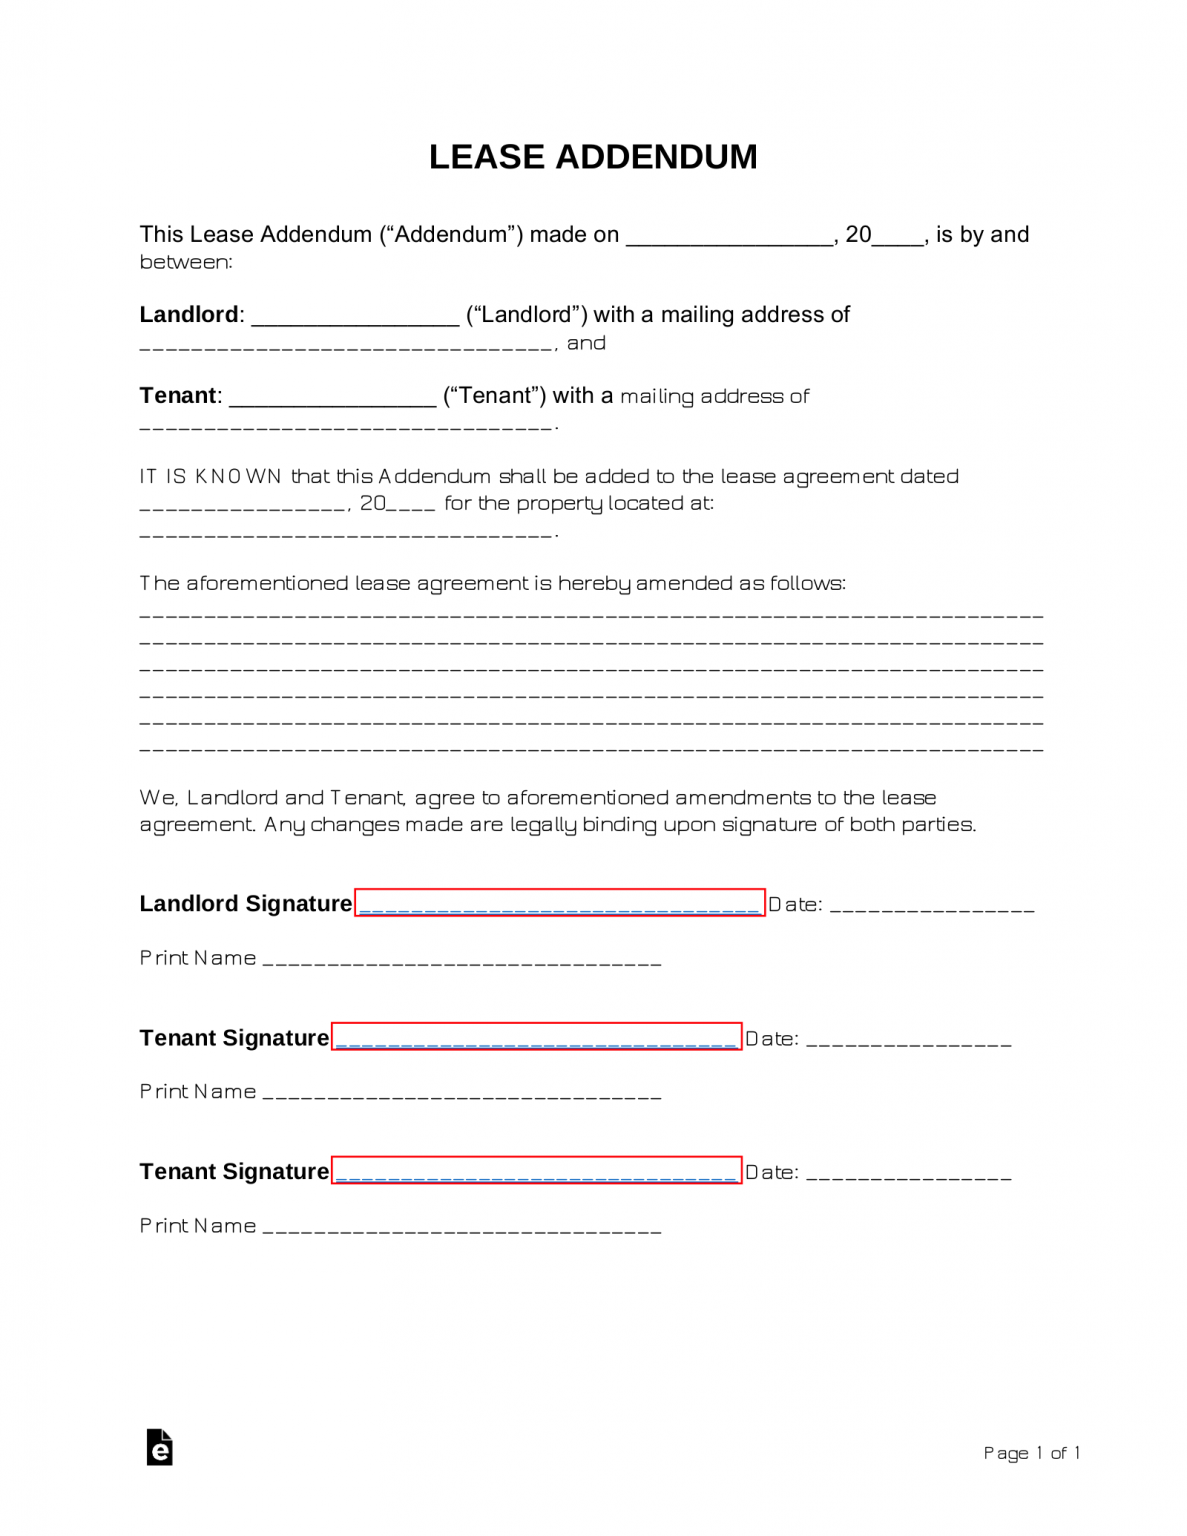 free-lease-addendum-templates-word-pdf-eforms